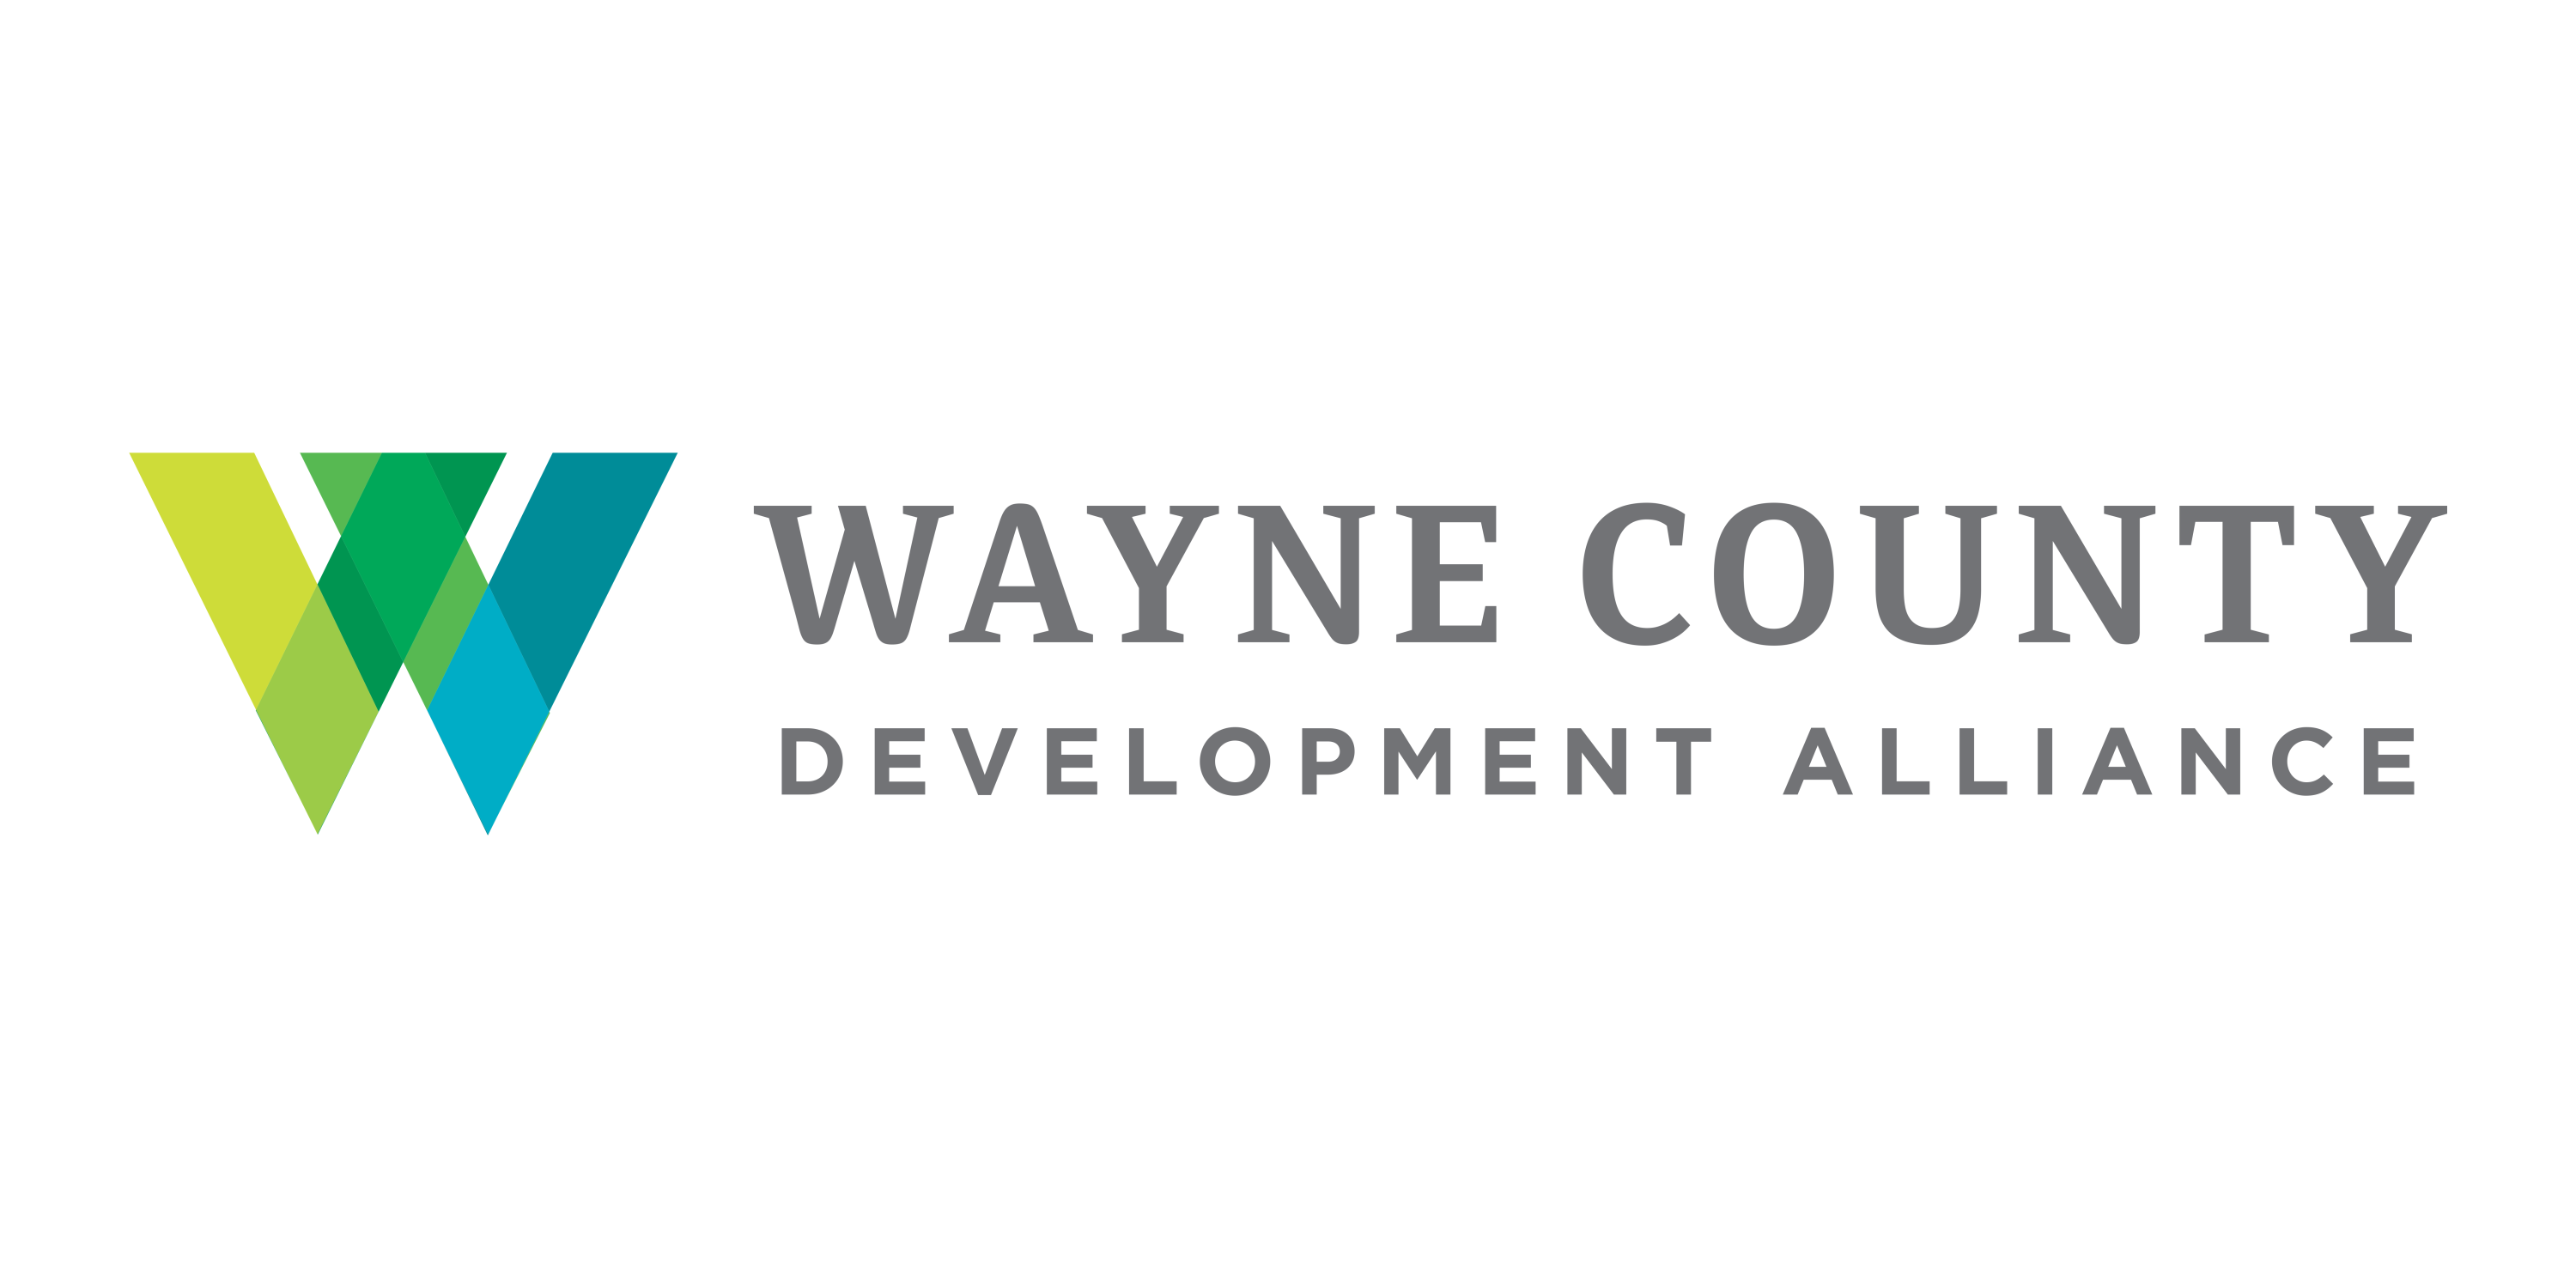 LaunchGOLDSBORO partner Wayne County Development Alliance